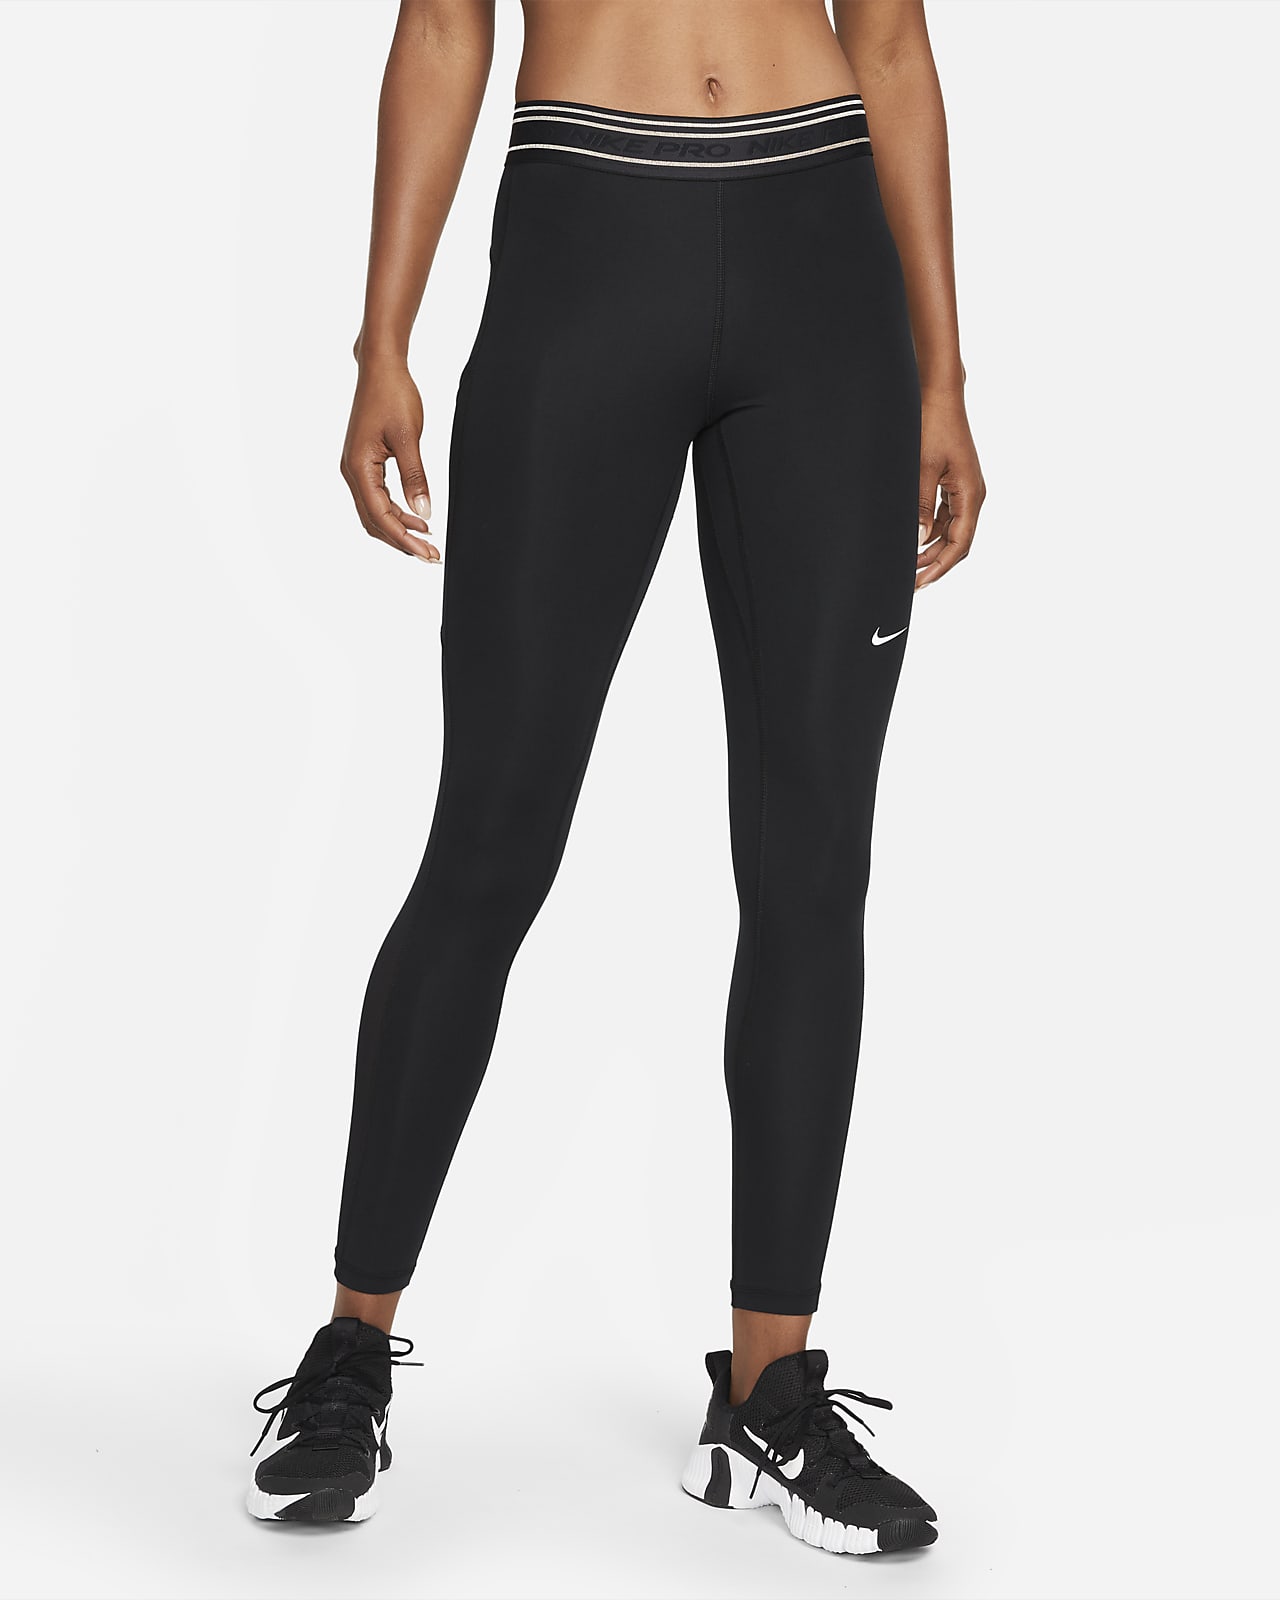 Prædike I udlandet hvede Nike Pro Dri-FIT Women's Mid-Rise Pocket Leggings. Nike.com